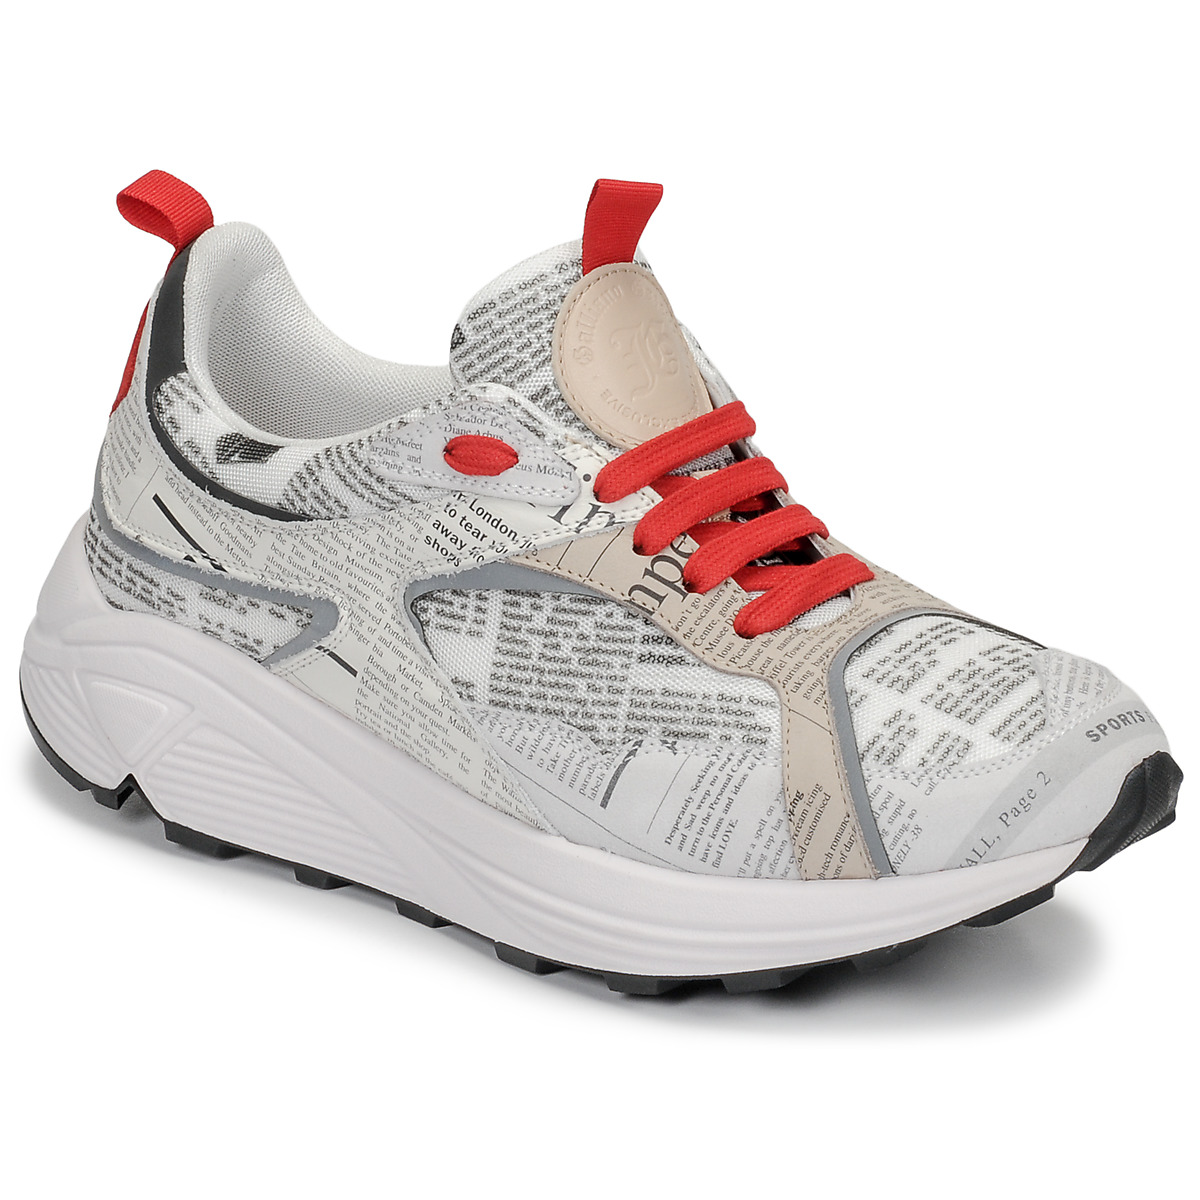 john galliano  8516  men's shoes (trainers) in grey